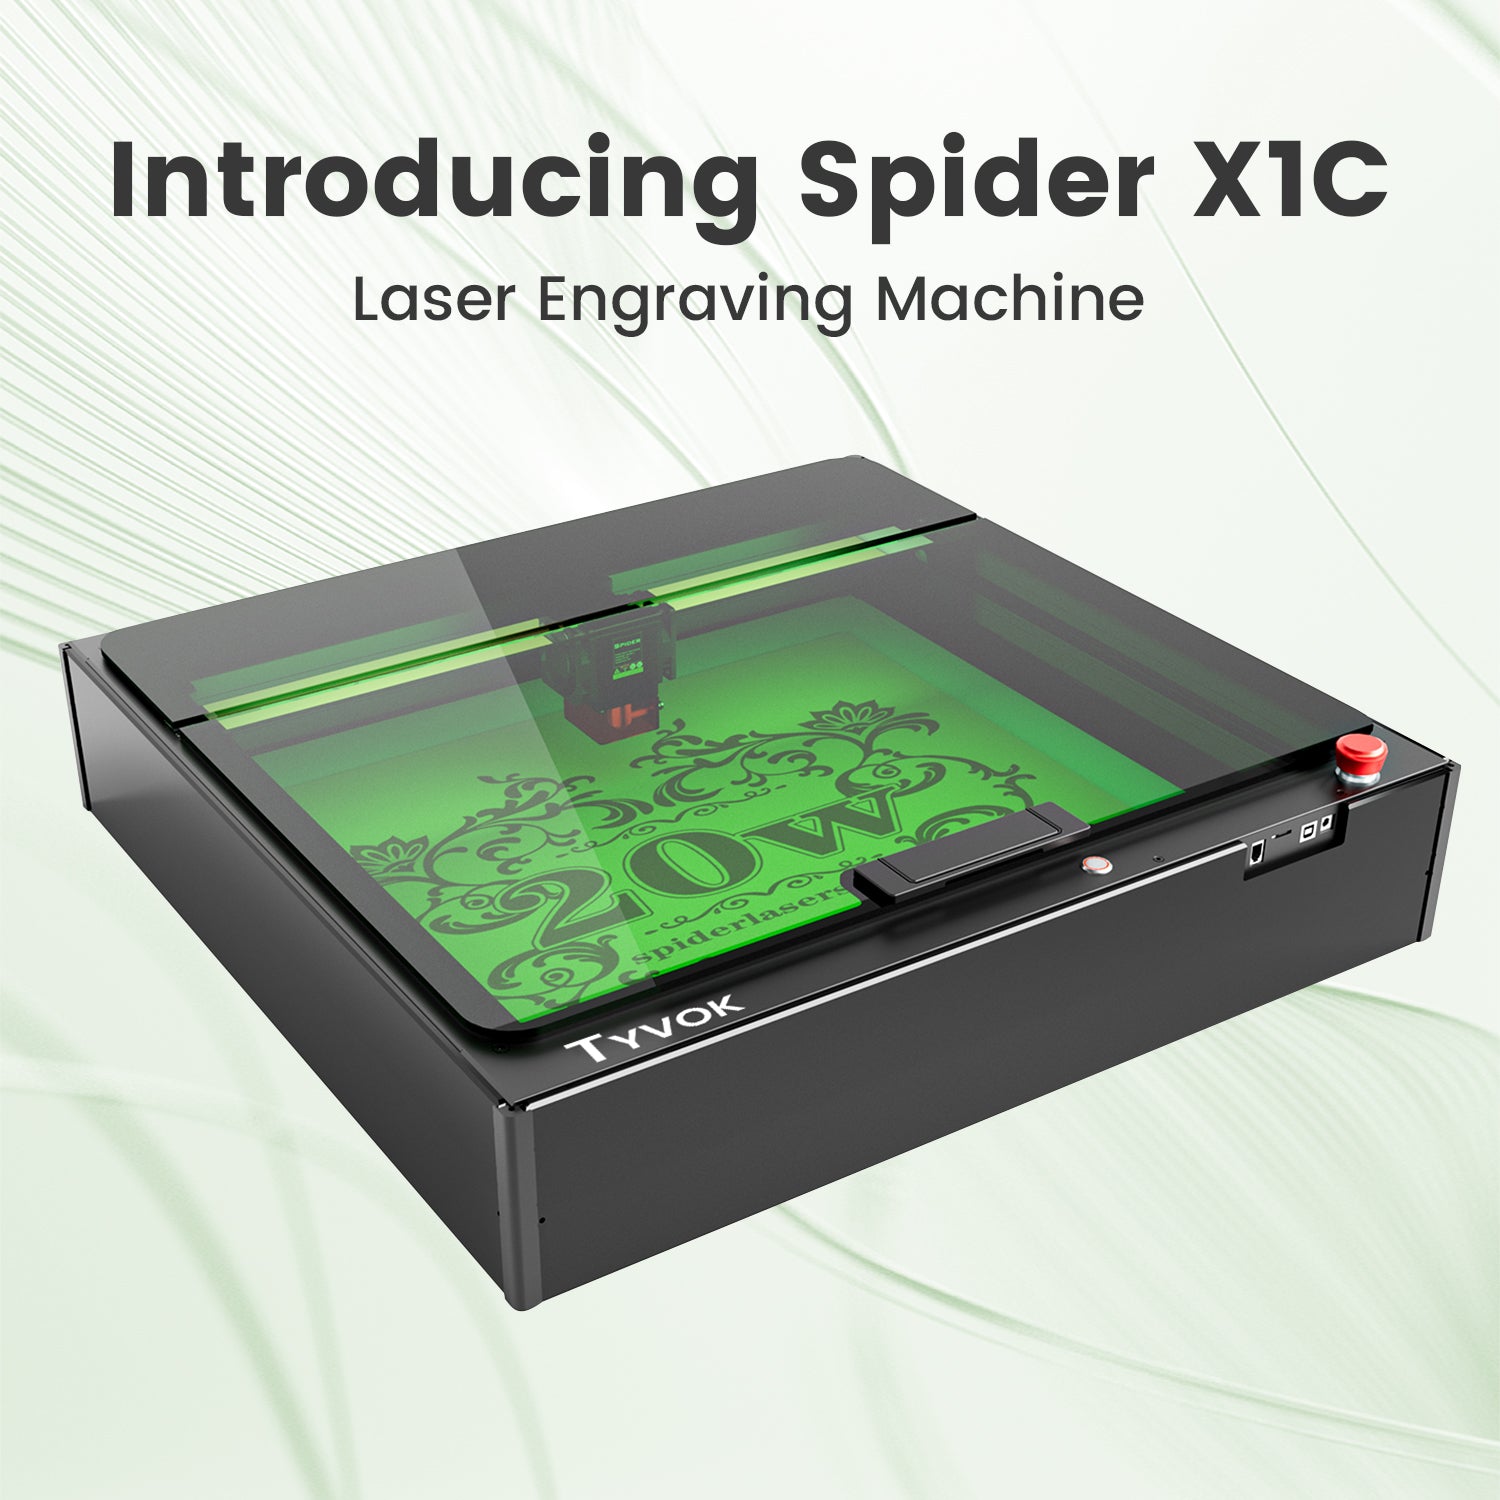 Introducing Spider X1C Laser Engraving Machine - Revolutionizing Laser Engraving Technology